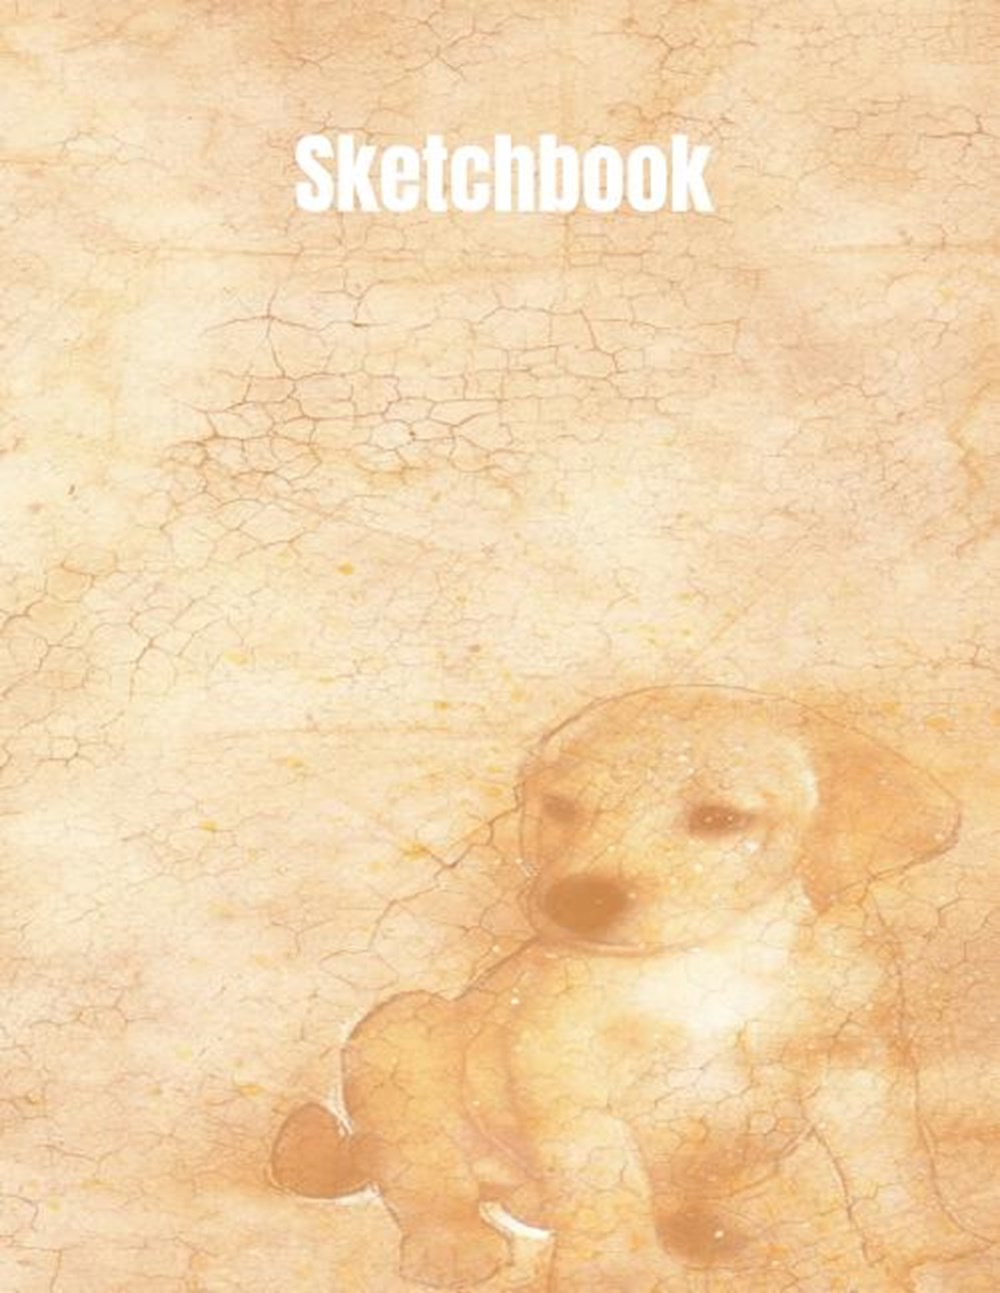 Sketchbook For Drawing, Doodling, And Sketching. Artwork Journal For Artists